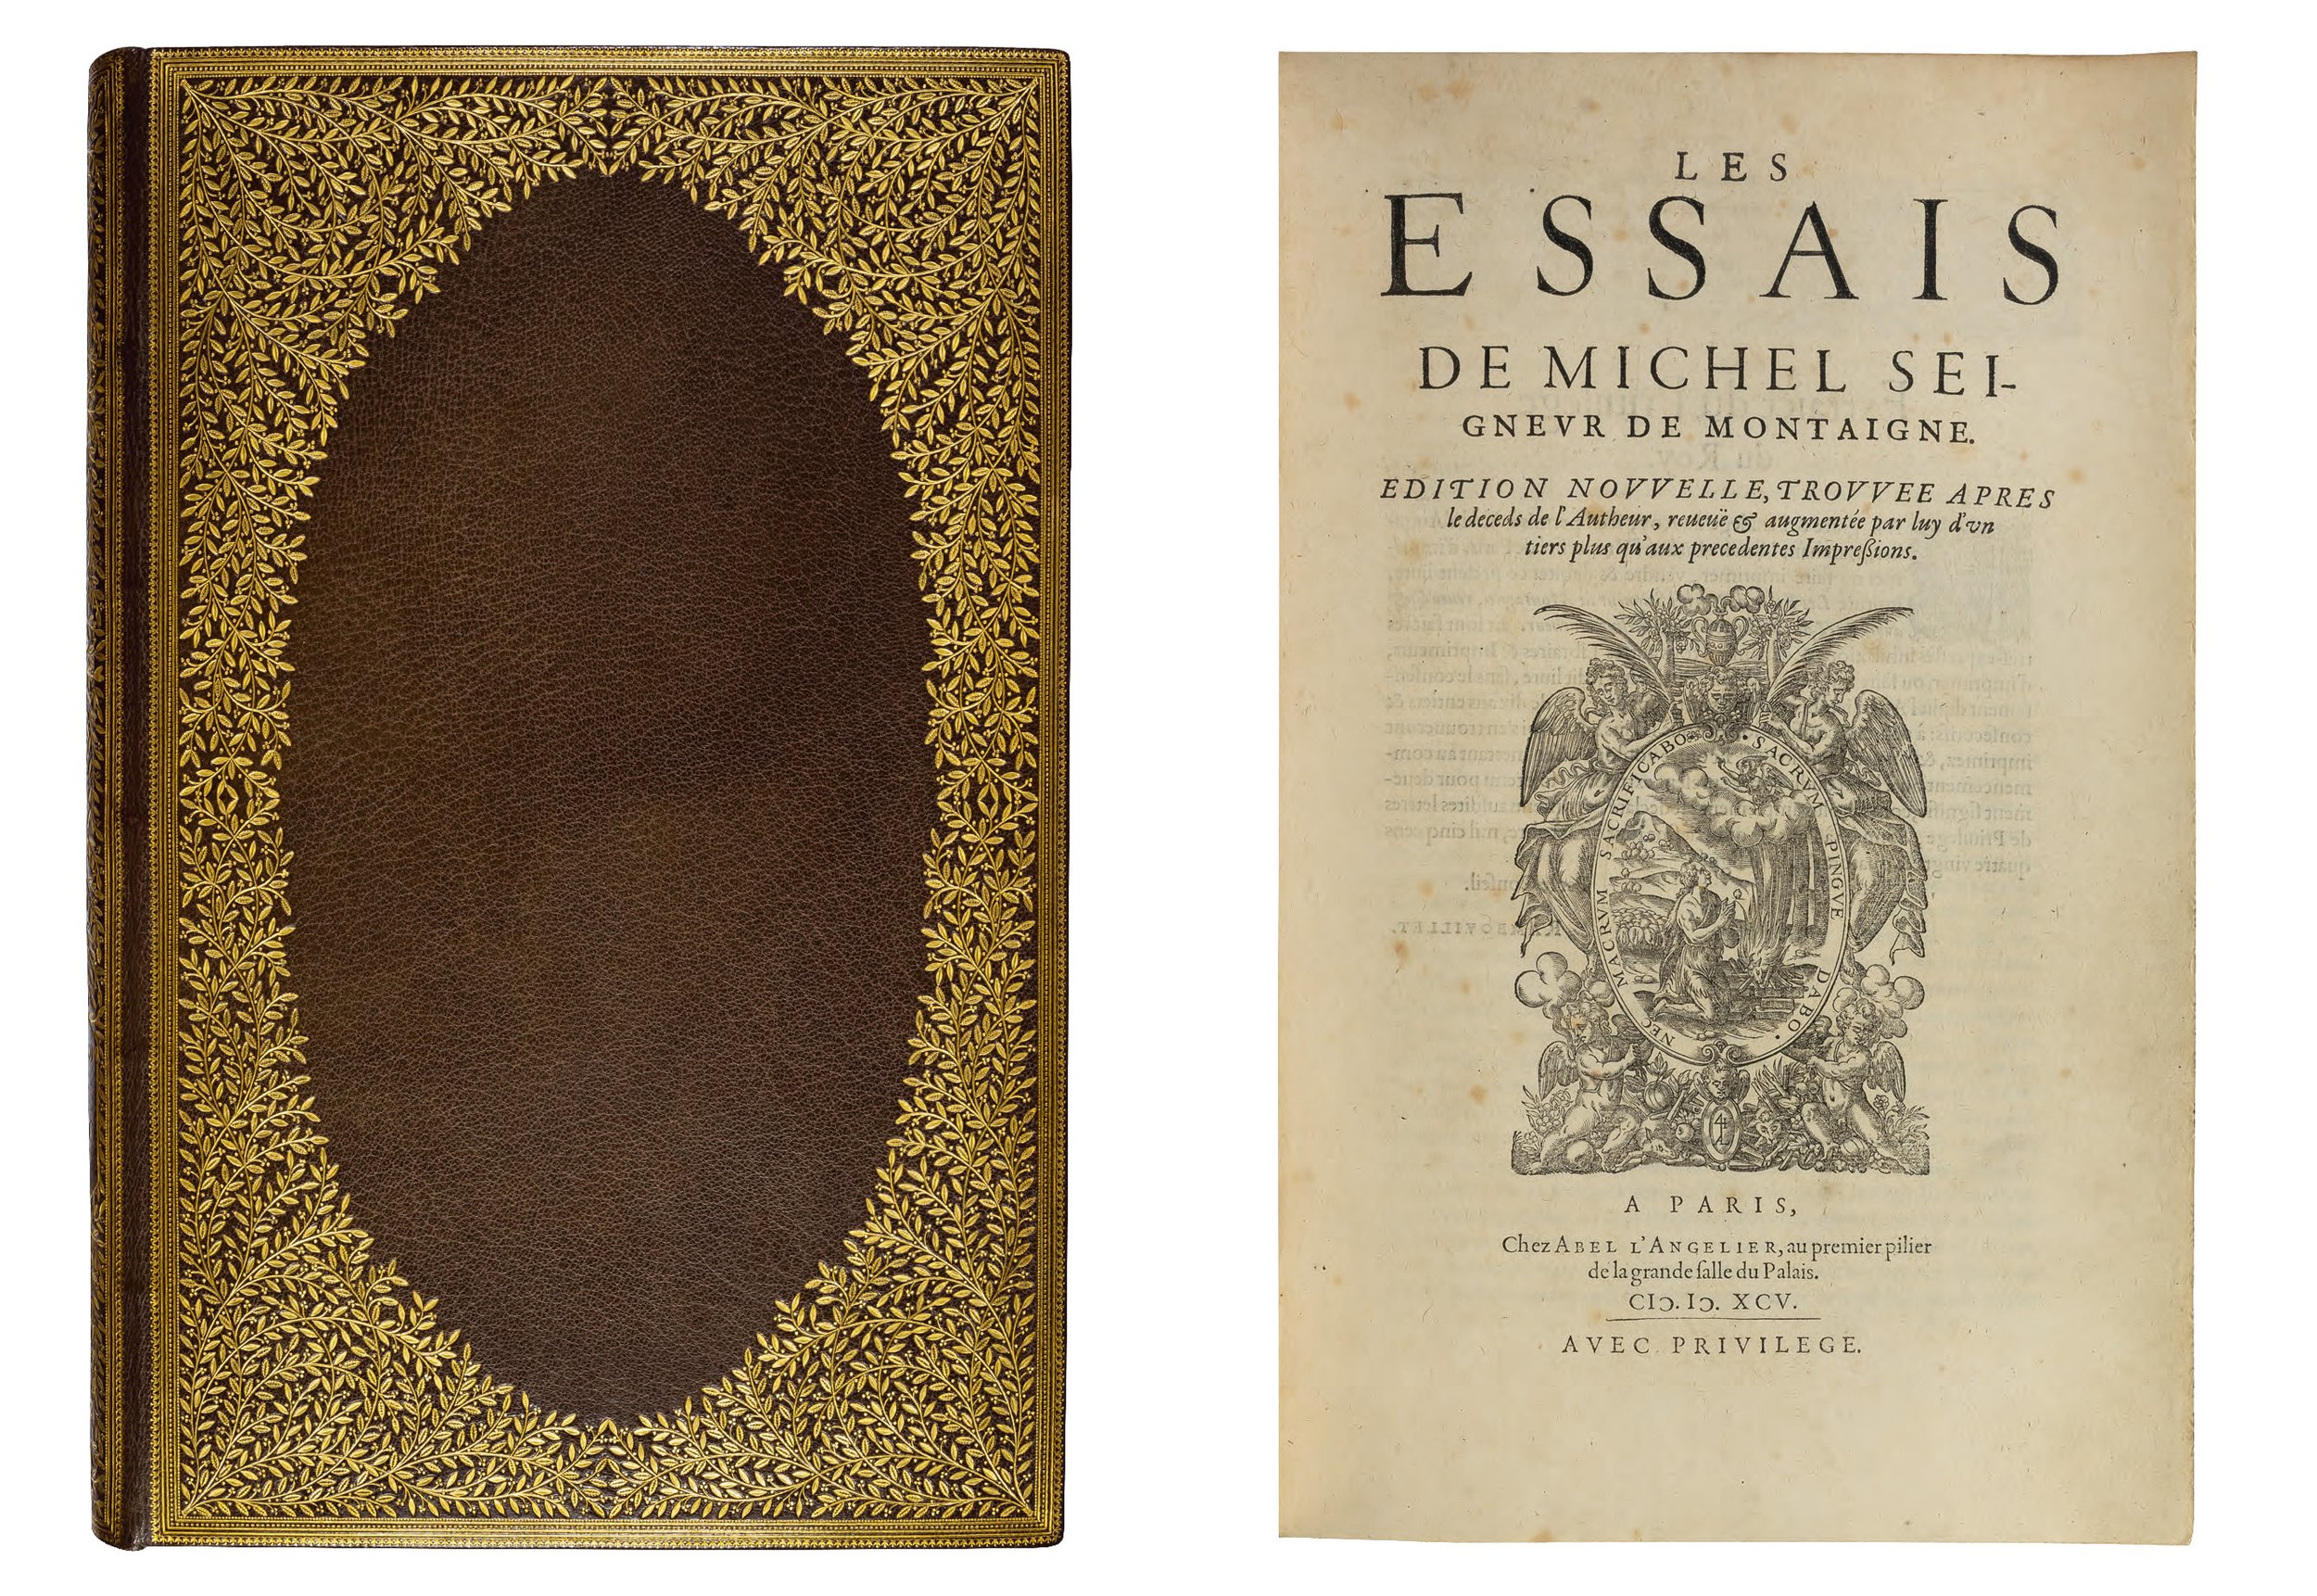 099a Montaigne Essais 1595 gilt morocco binding by Lortic